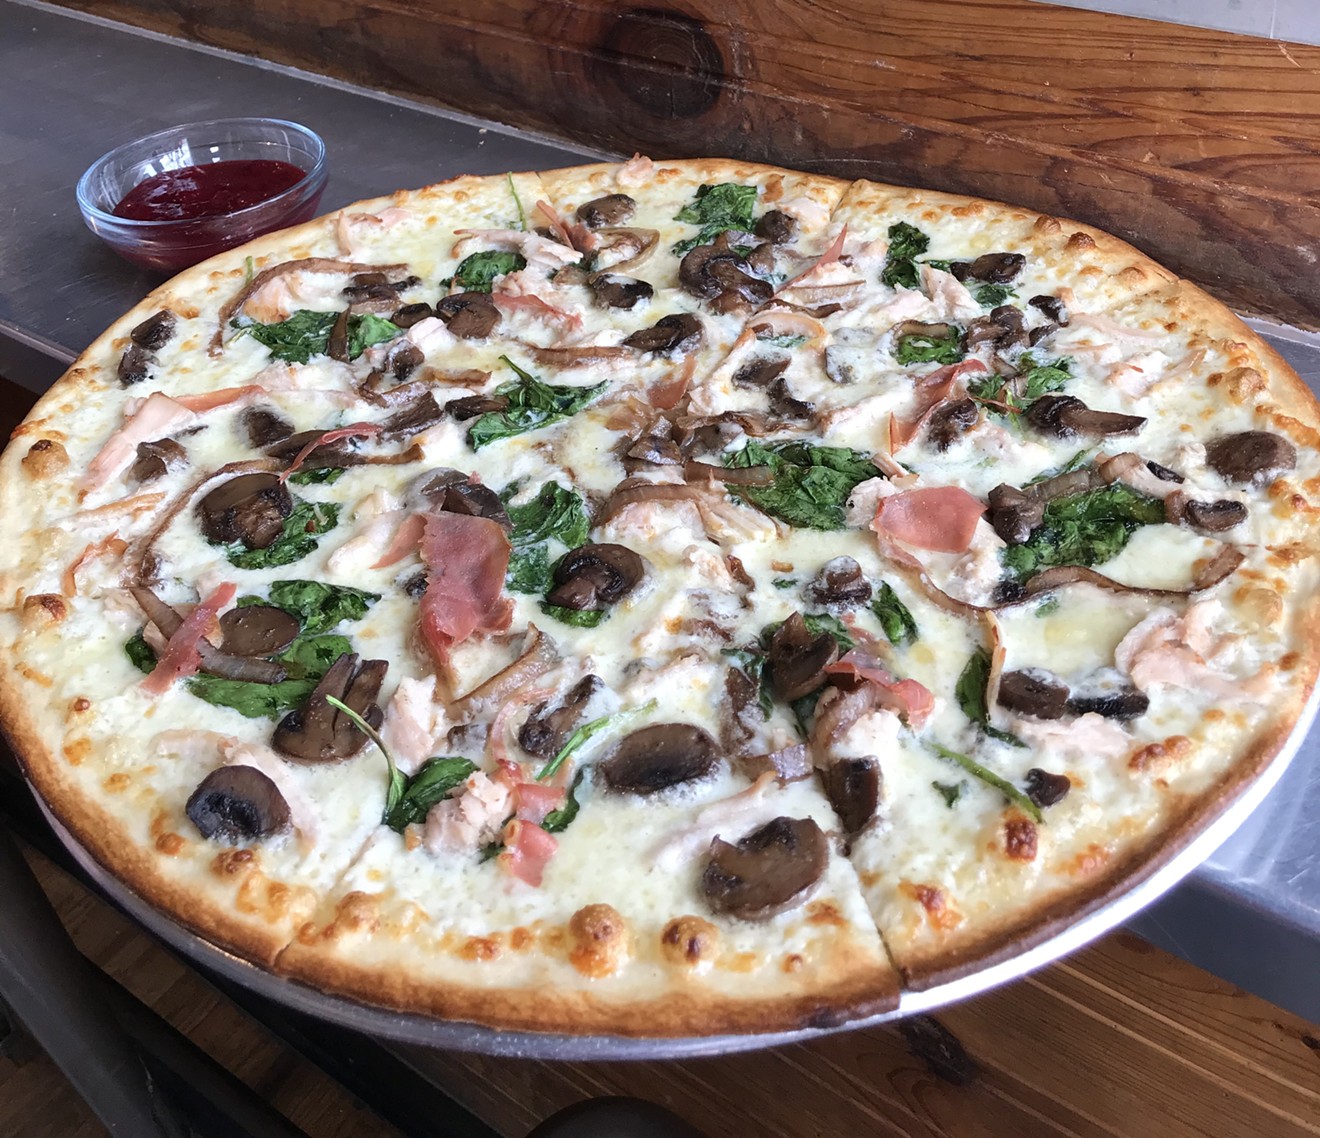 Greenville Avenue Pizza Company's wild turkey pizza is a collaboration with chef Kent Rathbun.